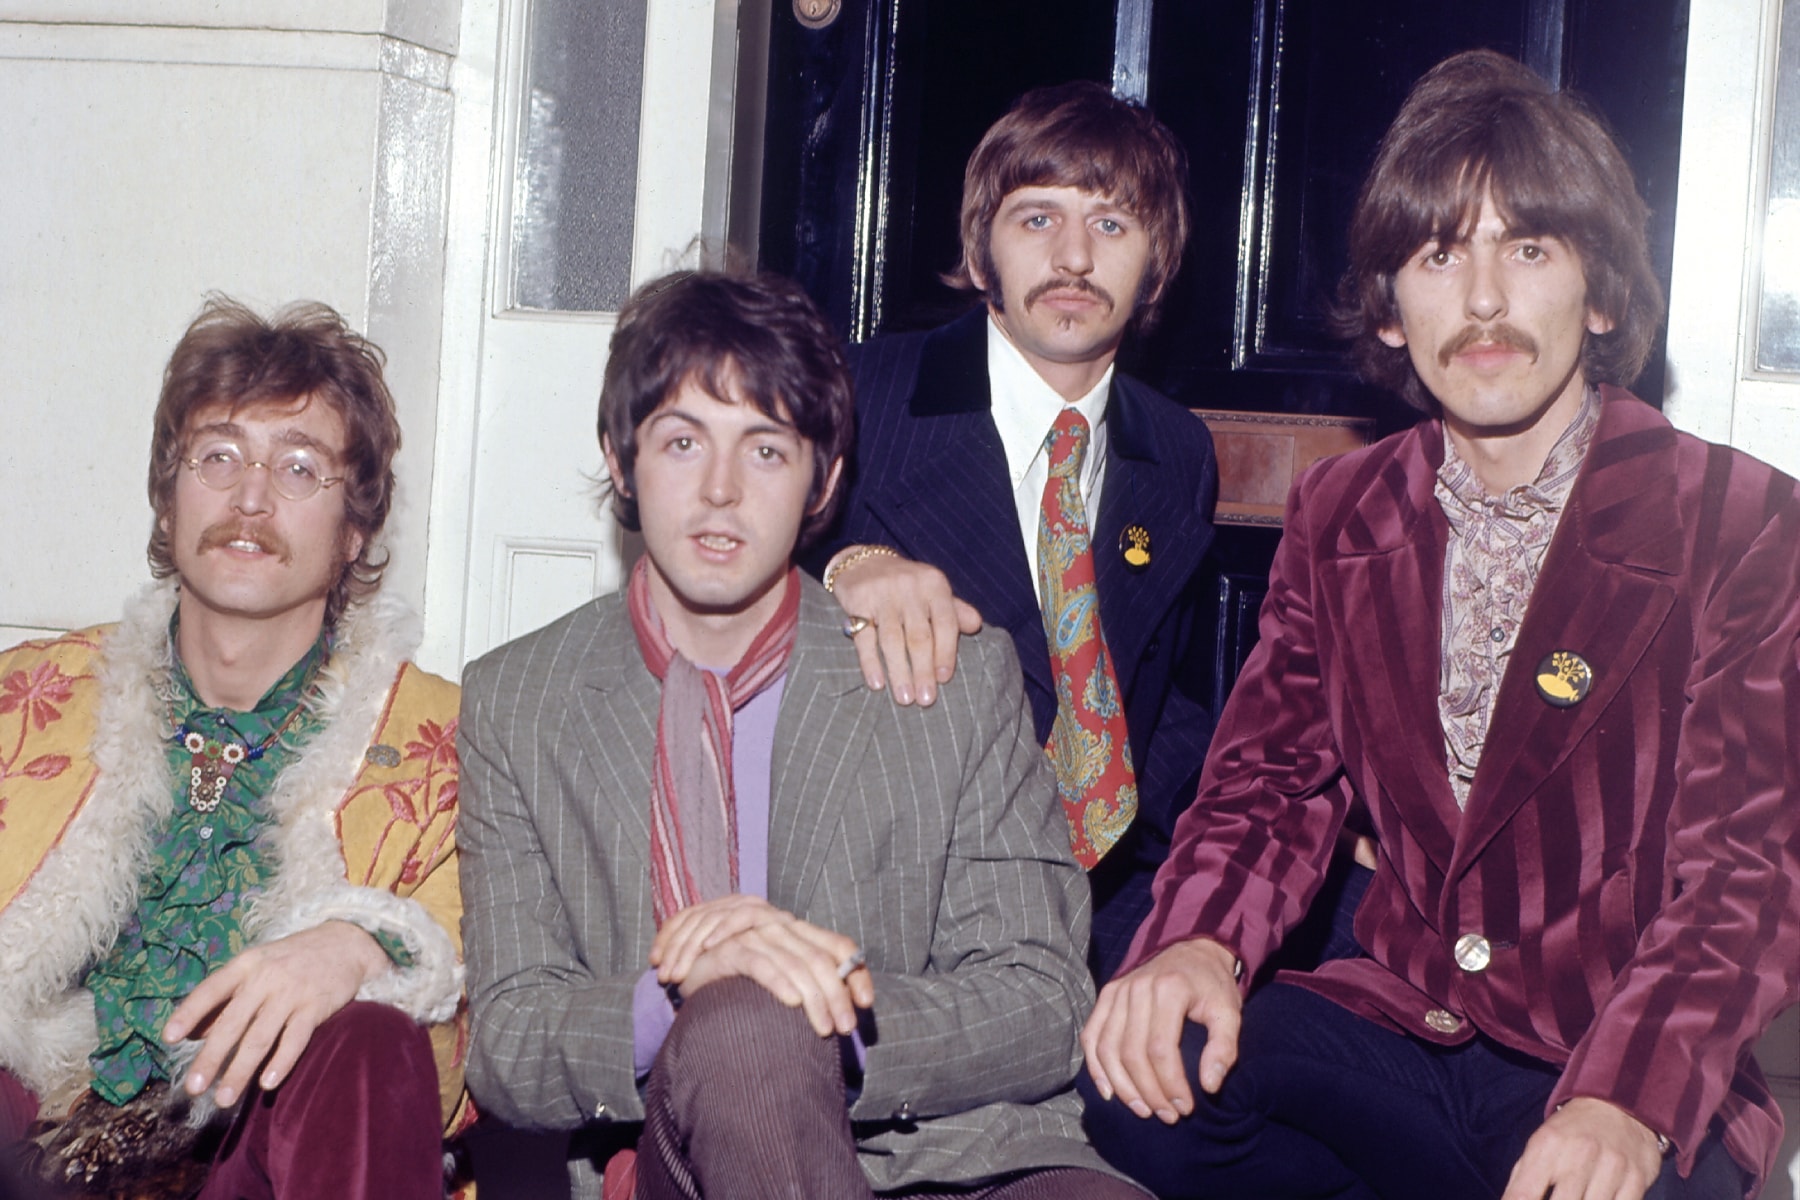 《Skyfall》導演 Sam Mendes 宣佈製作 The Beatles 成員獨立傳記電影四部曲